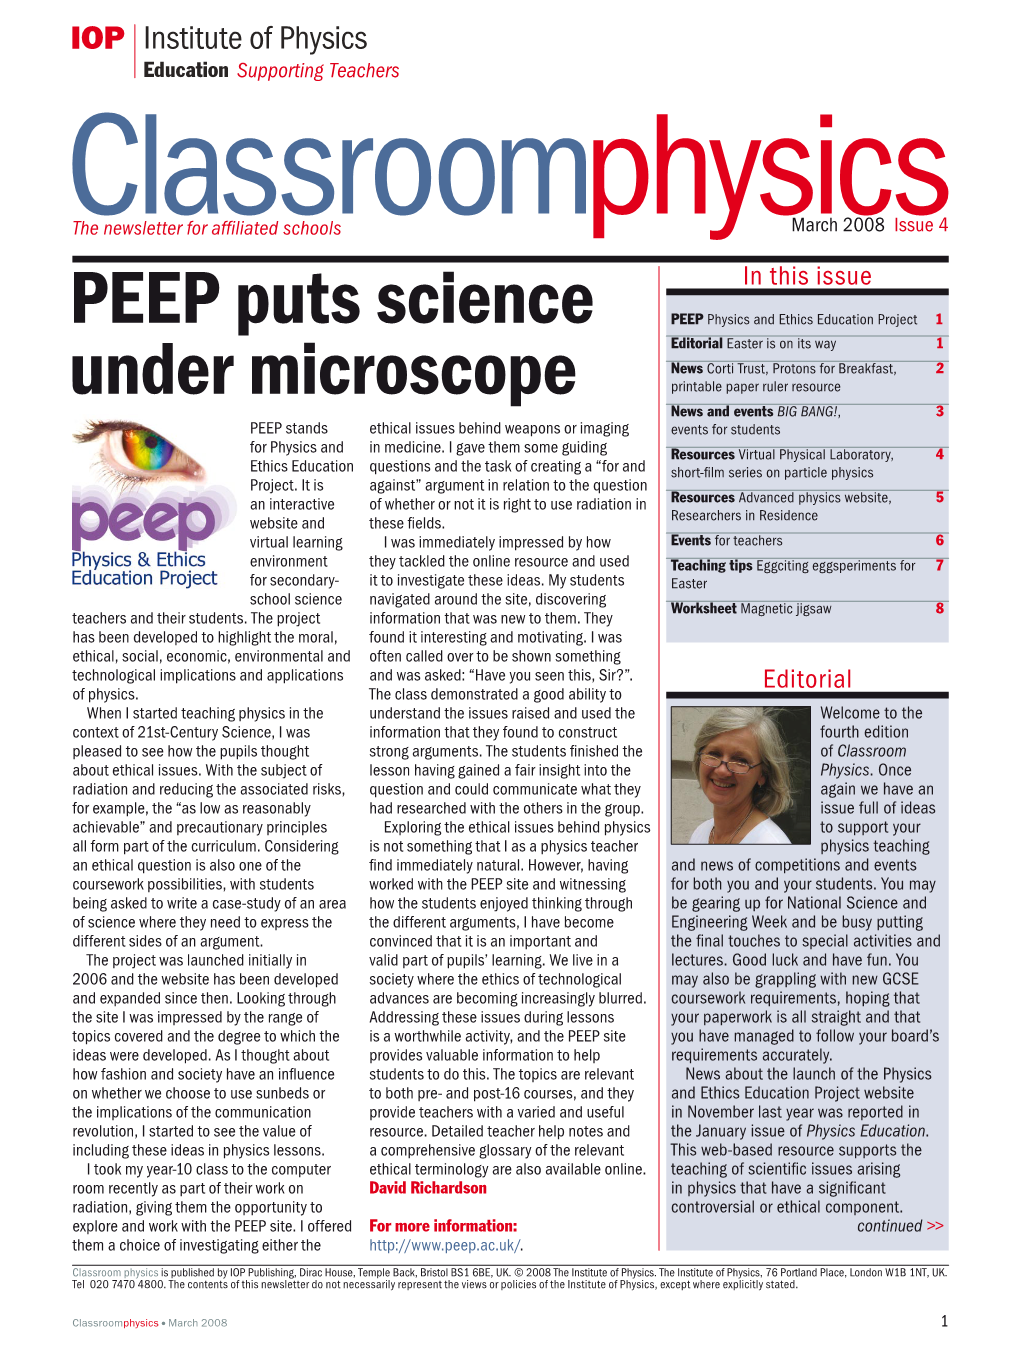 Classroom Physics March 2008 Edition